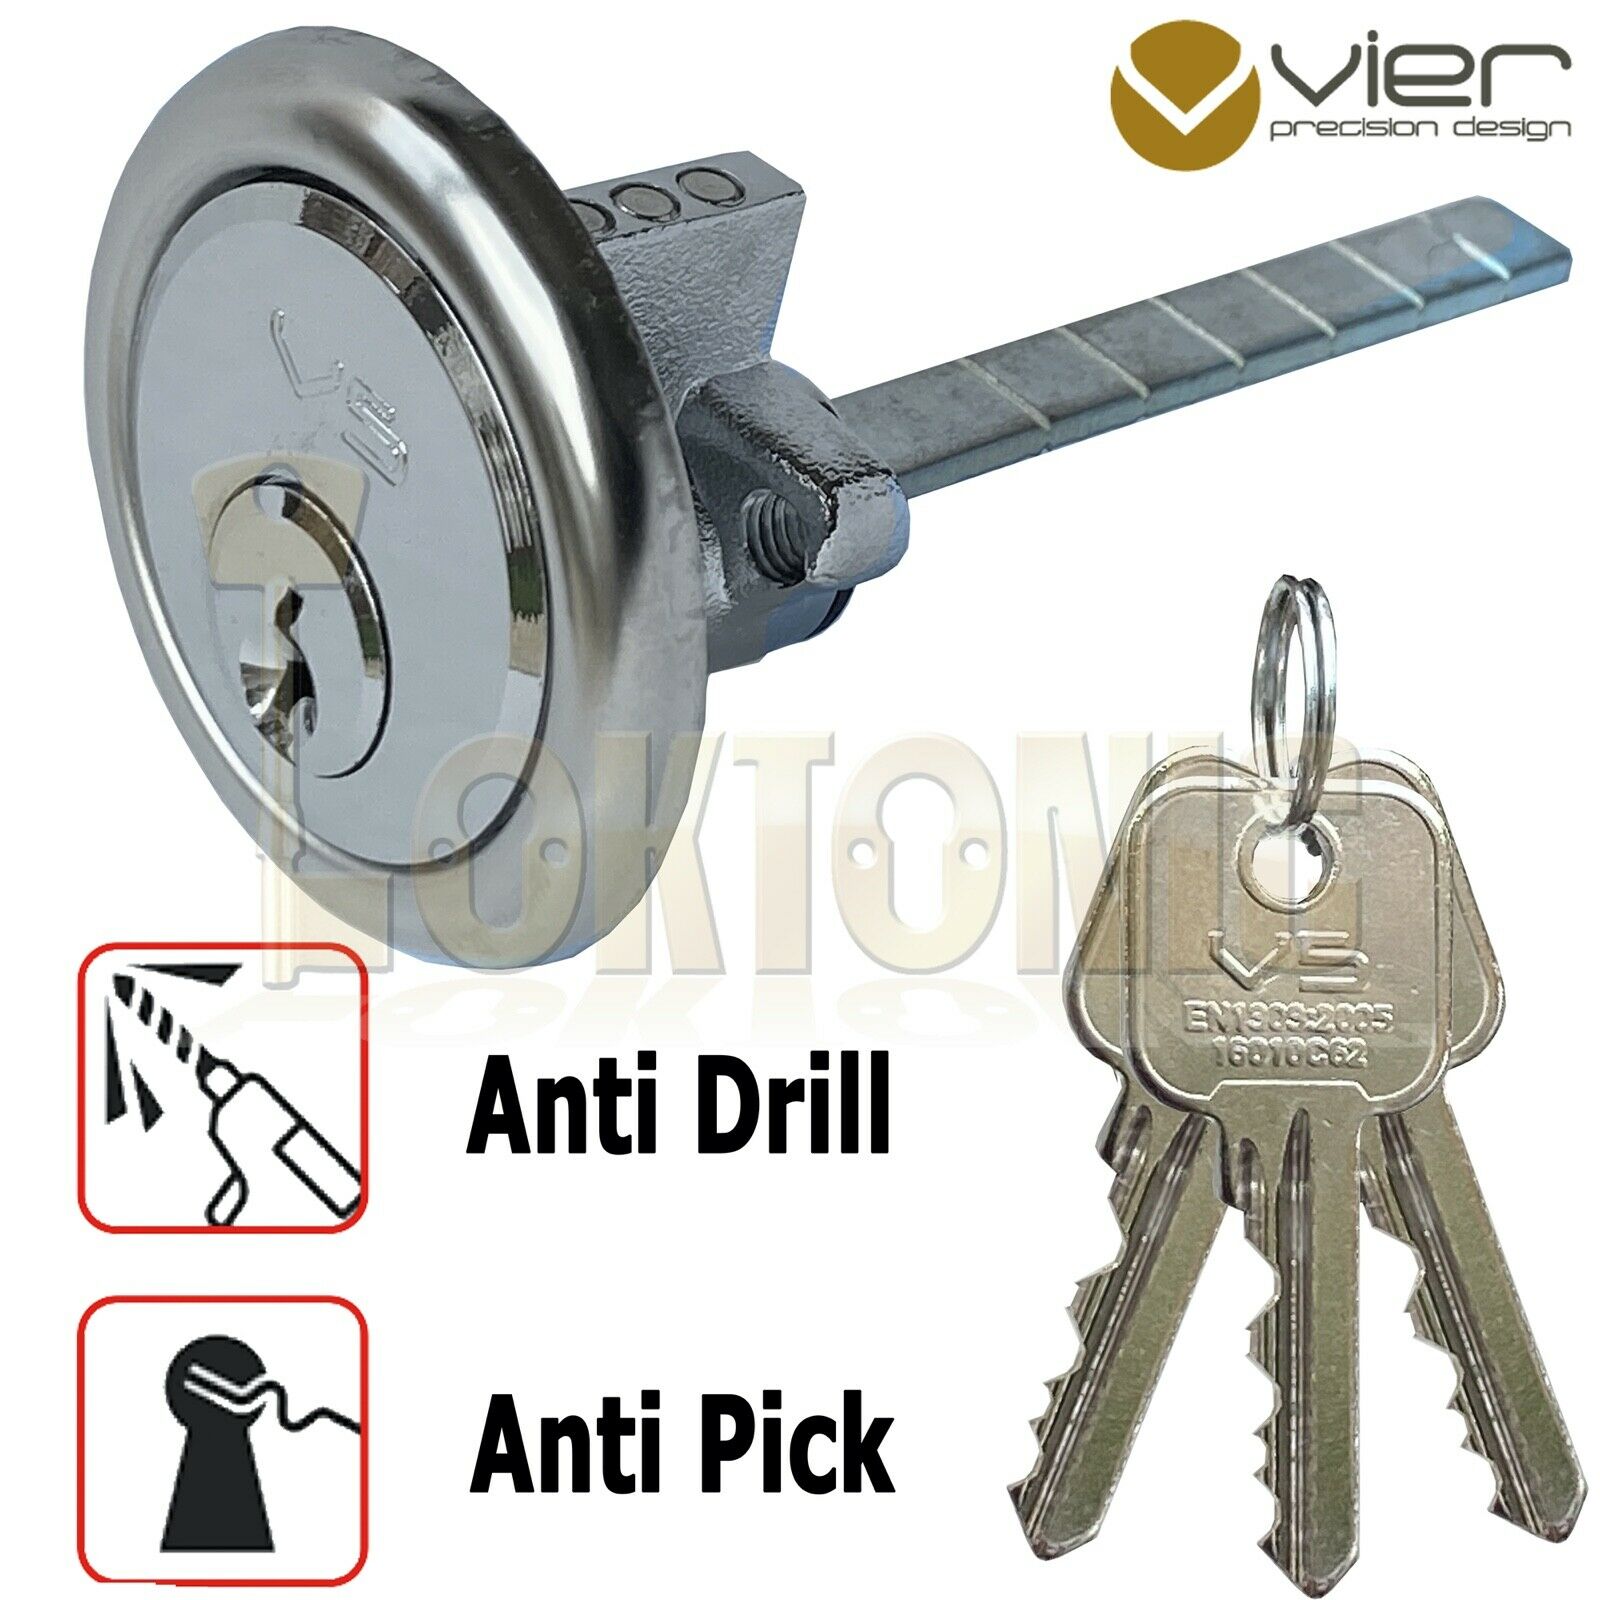 Details about   Security Rim Cylinder Door Lock Polished Chrome Yale ERA Latch fit Keyed Alike 